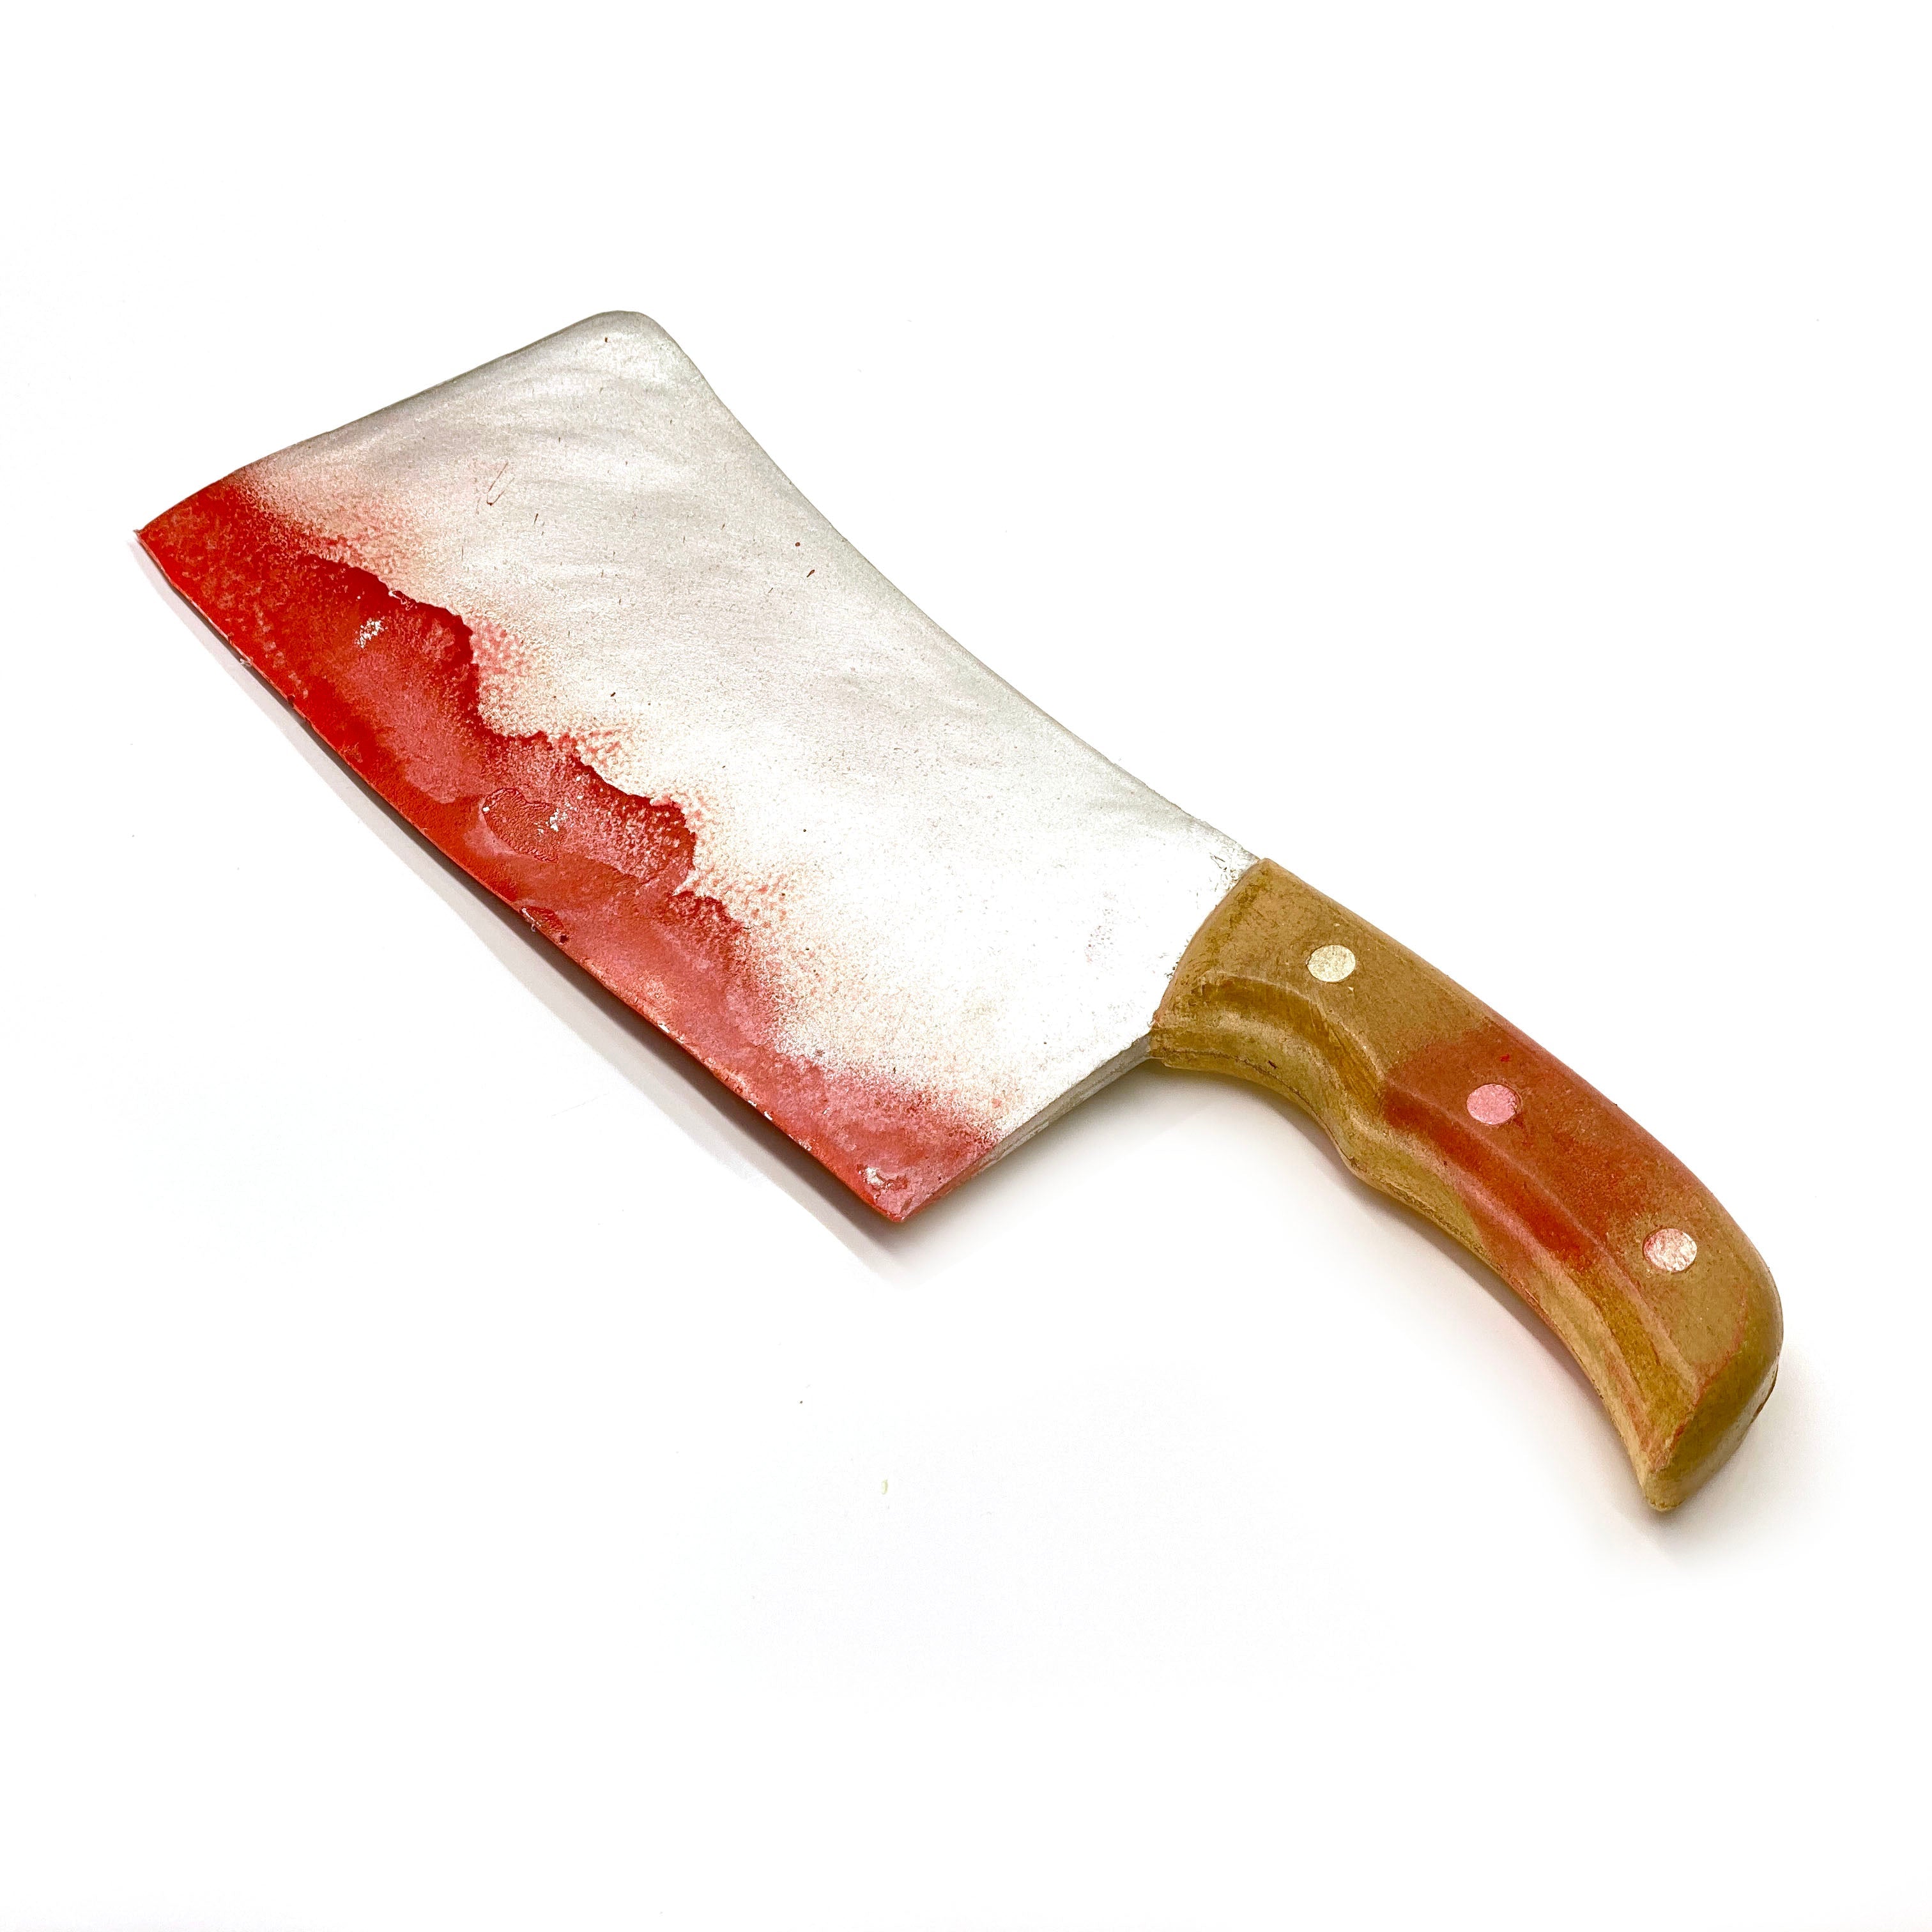 Foam Rubber Lightwood Handle Medium Butcher's Cleaver Prop - Bloody - Bloody